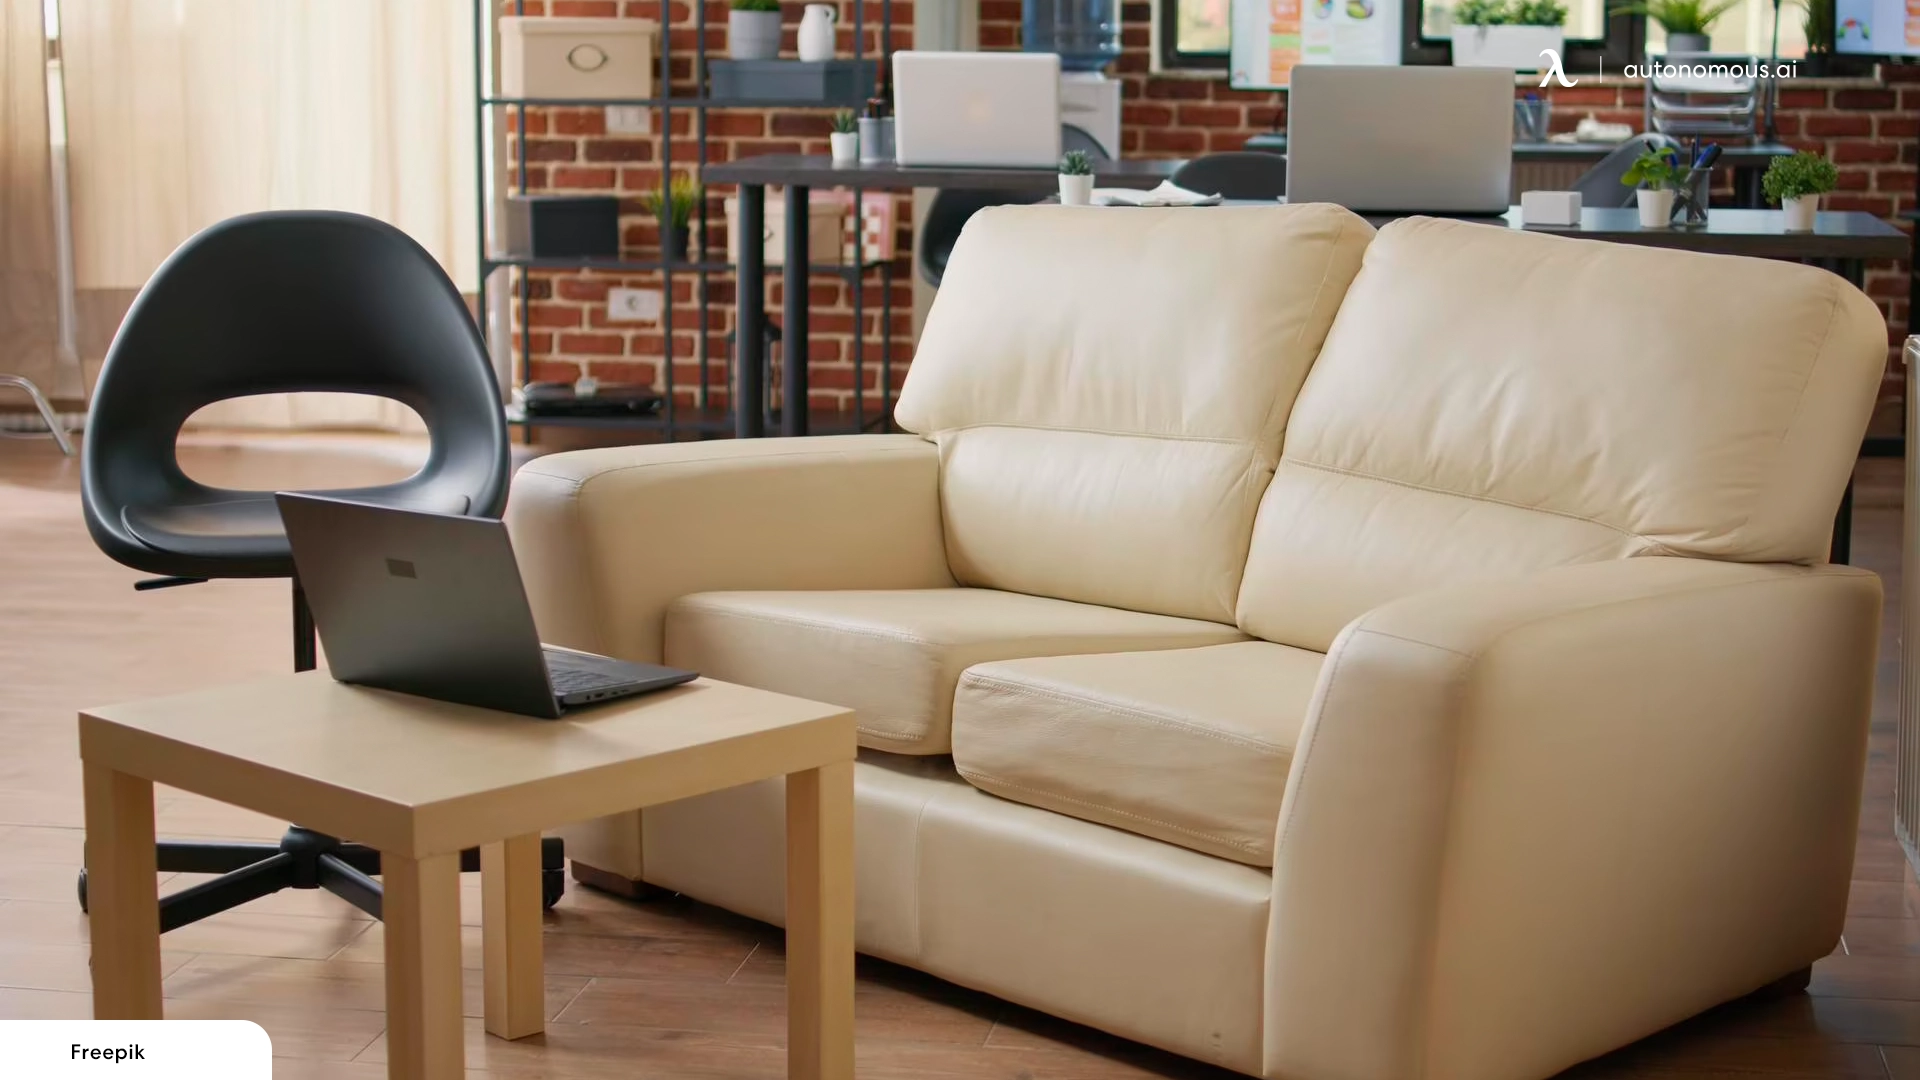 Add a Comfortable Sofa - entertainment room ideas